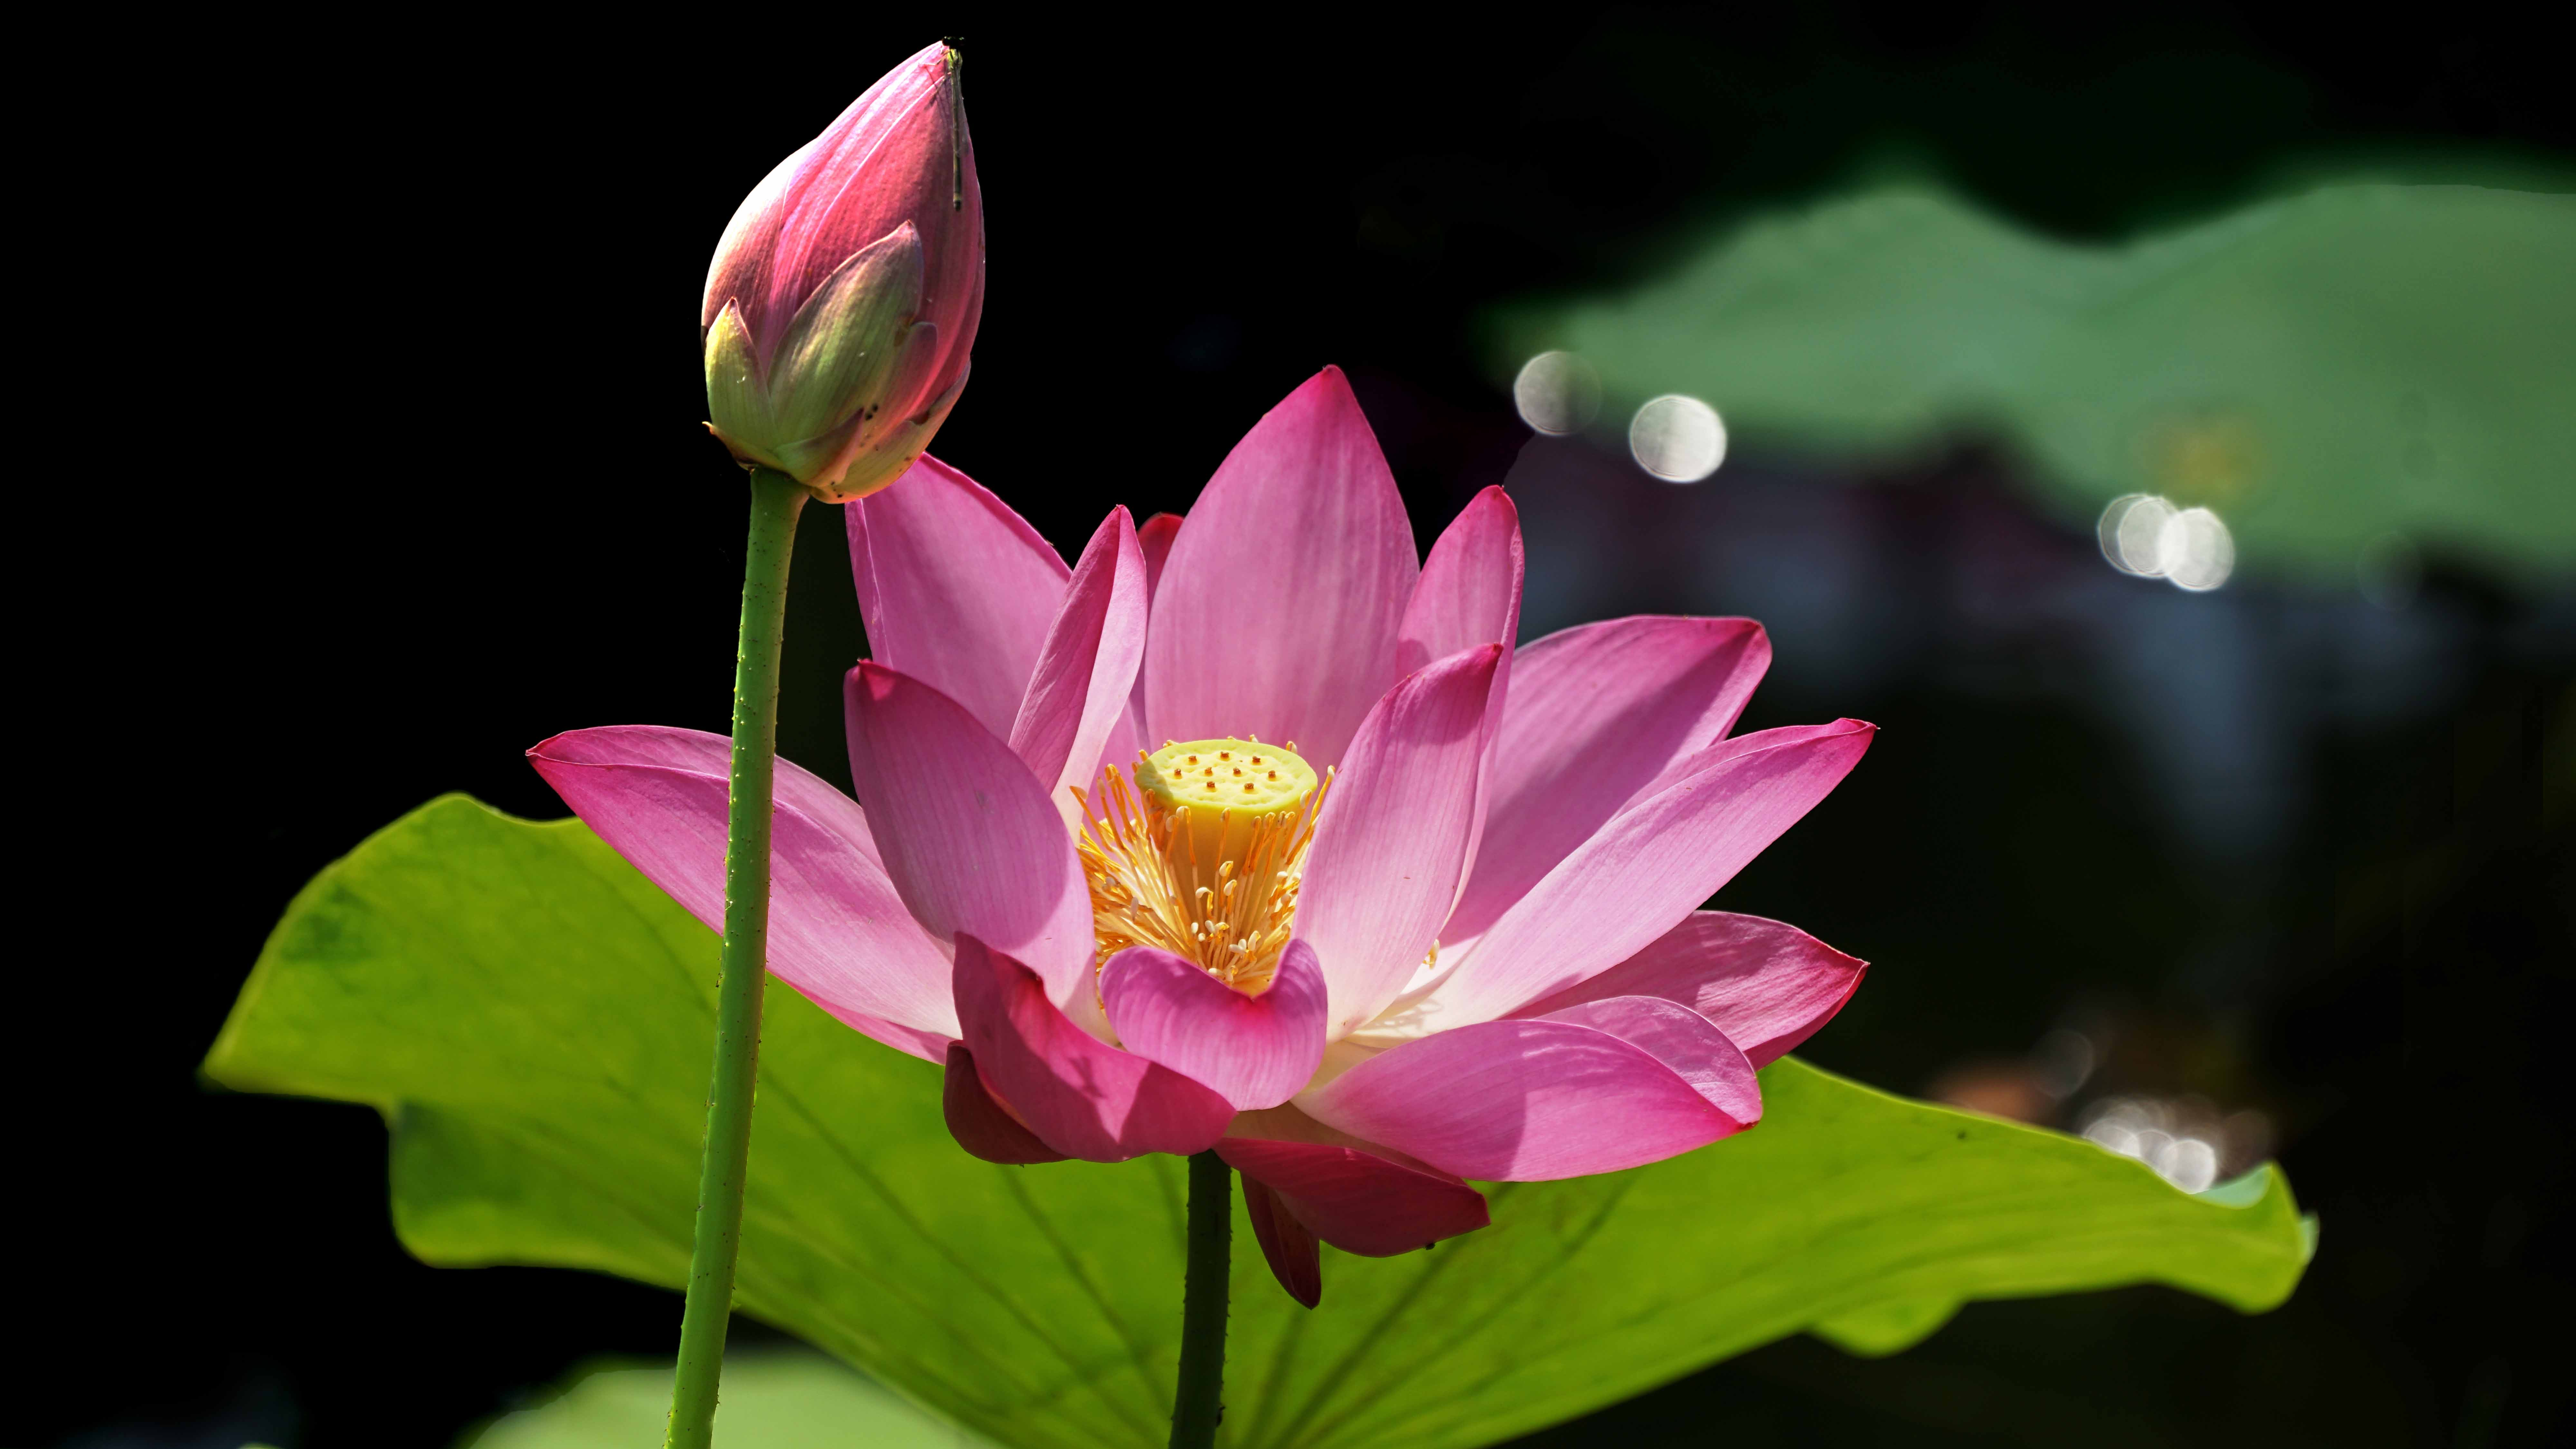 Plan your next trip to Beijing lotus in bloom at Old